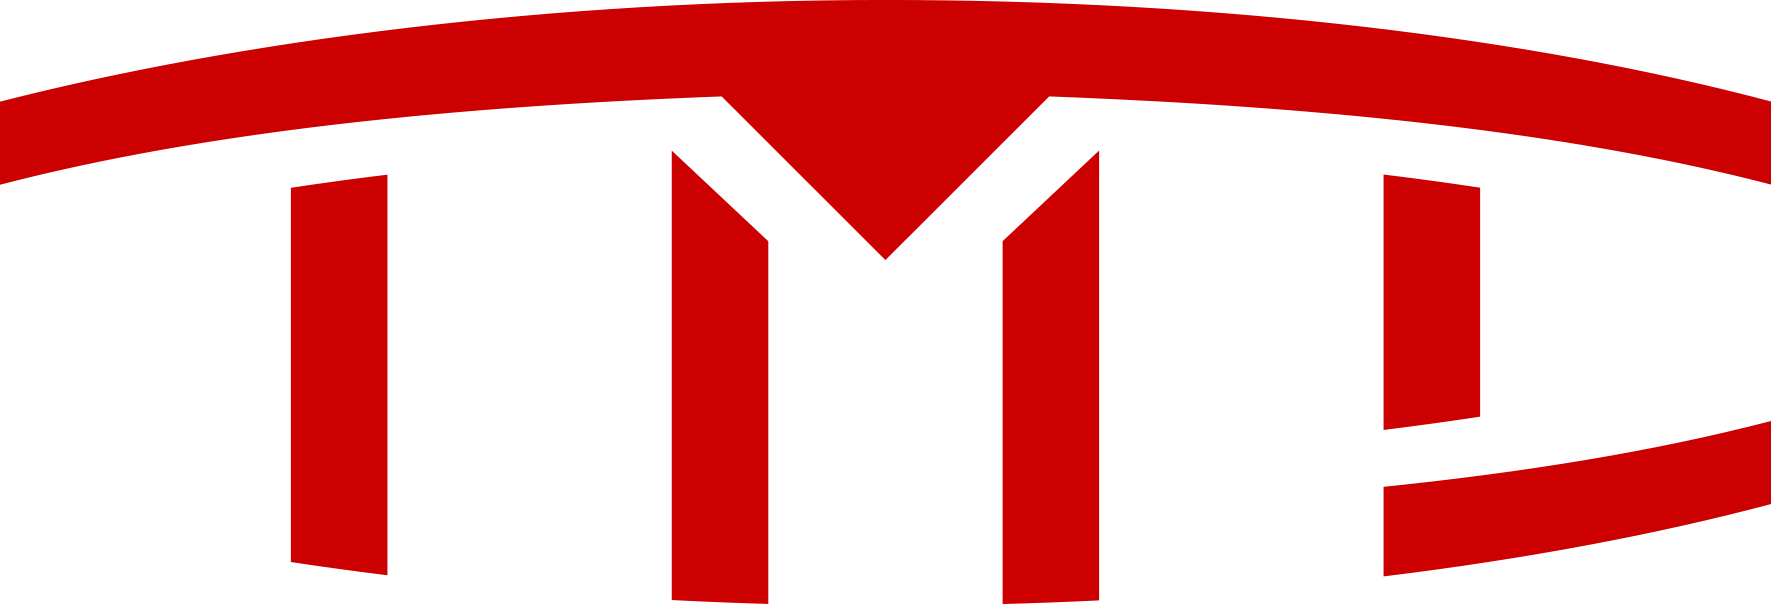 0 Result Images of Tesla Logo Red Png - PNG Image Collection